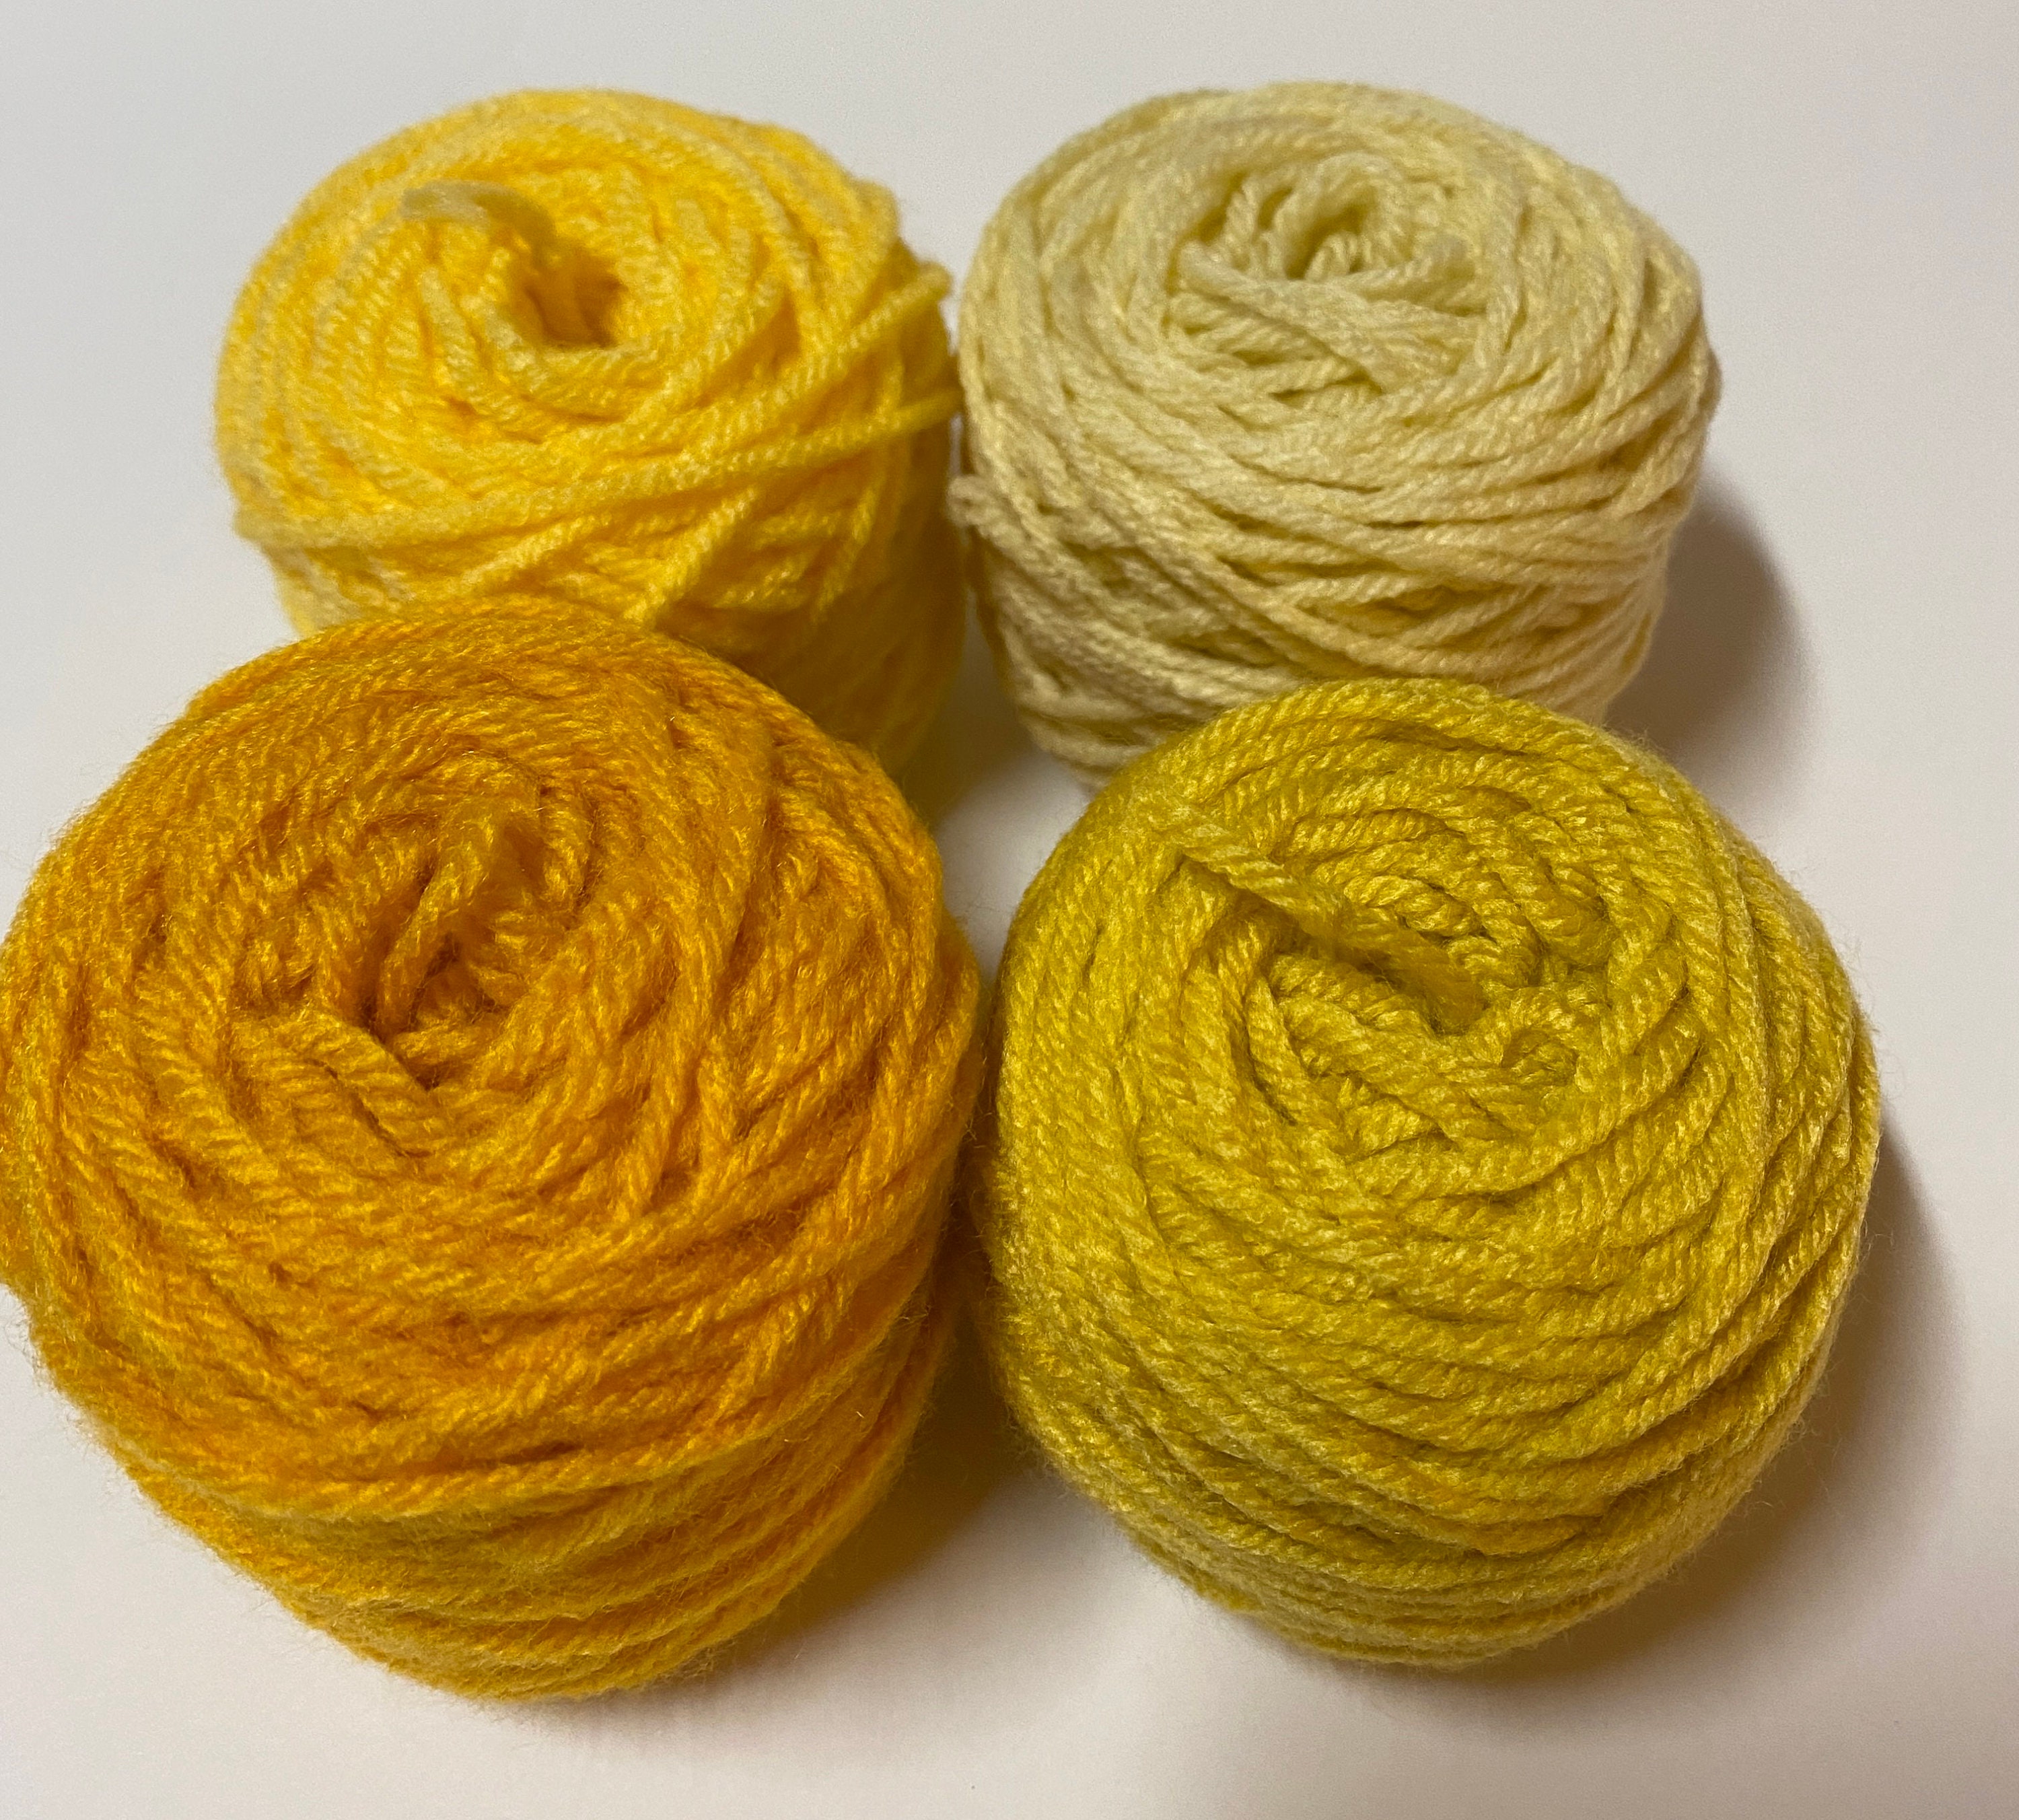 Shades of Yellow Yarn Mini Cakes 4 1oz 28g 100% Acrylic for Crafts,  Weaving, Knitting, Crochet Scrap Yarn Projects, Yarn Art Mixed Lot 4A 